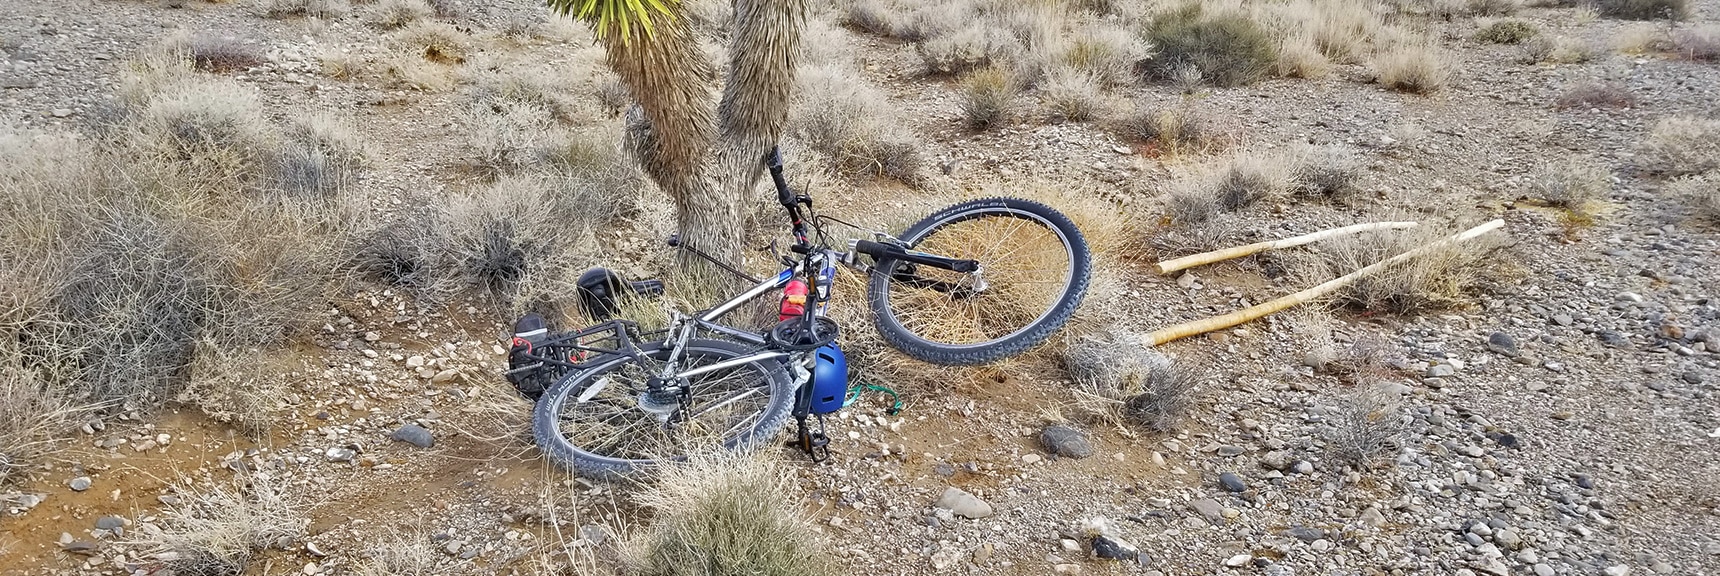 Leaving Bike Behind for Running/Hiking/Climbing Adventure | Cow Camp Road | Sheep Range | Desert National Wildlife Refuge, Nevada